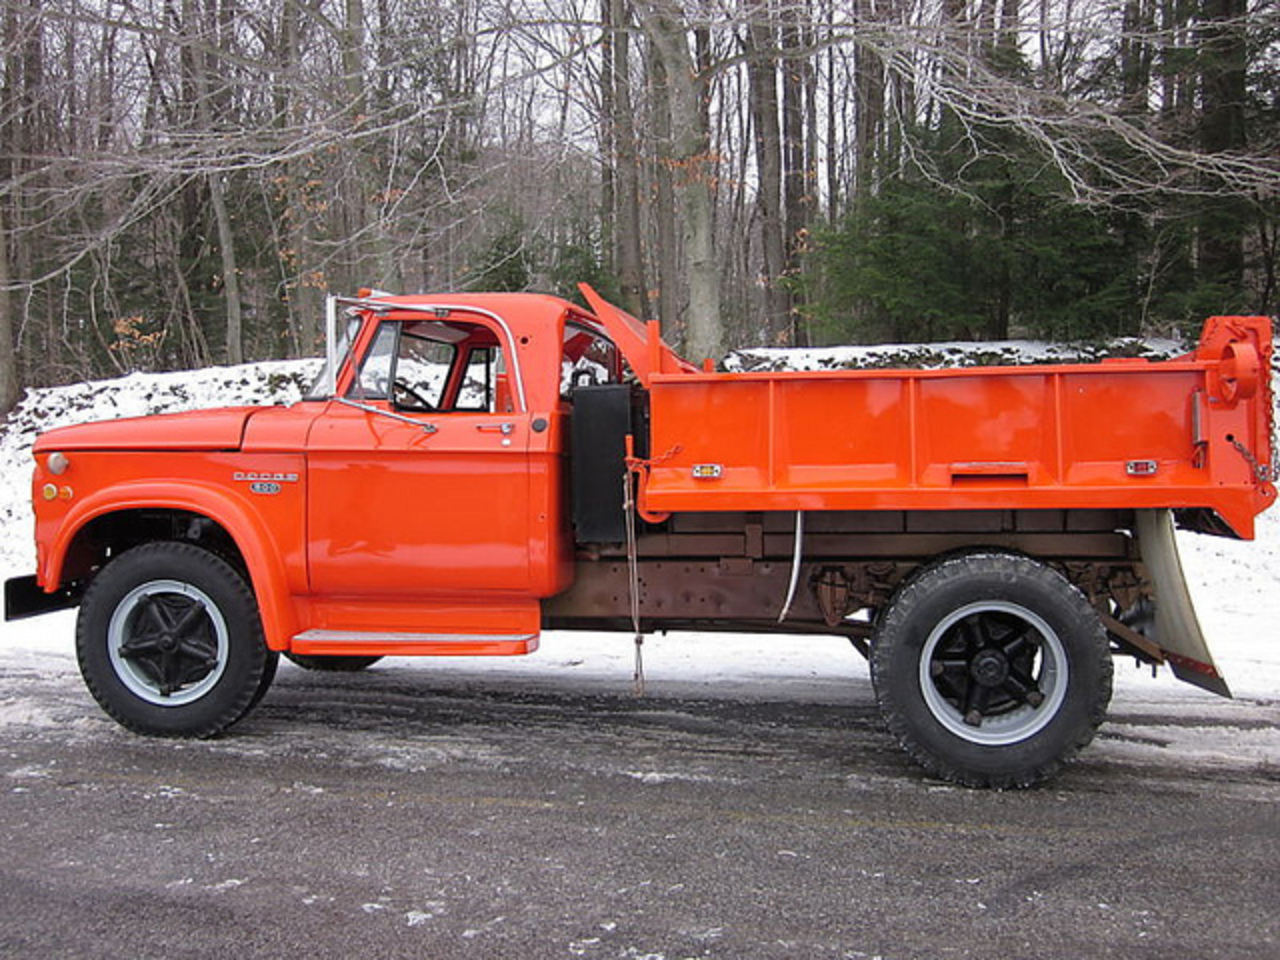 1968 Dodge 500 Series Dump Truck | Flickr - Photo Sharing!